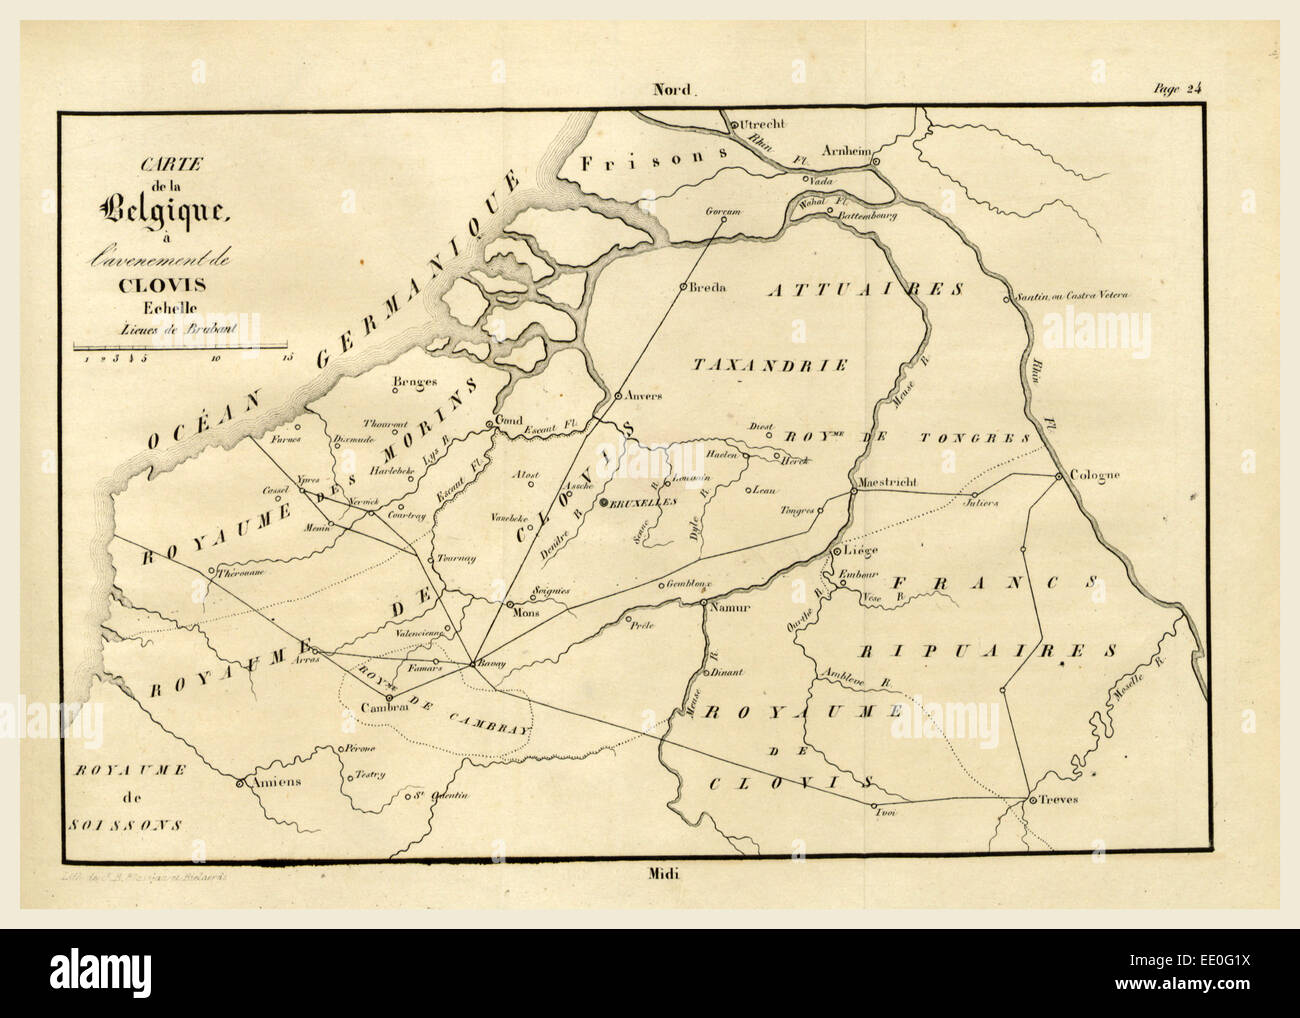 Map of Belgium, 19th century engraving Stock Photo